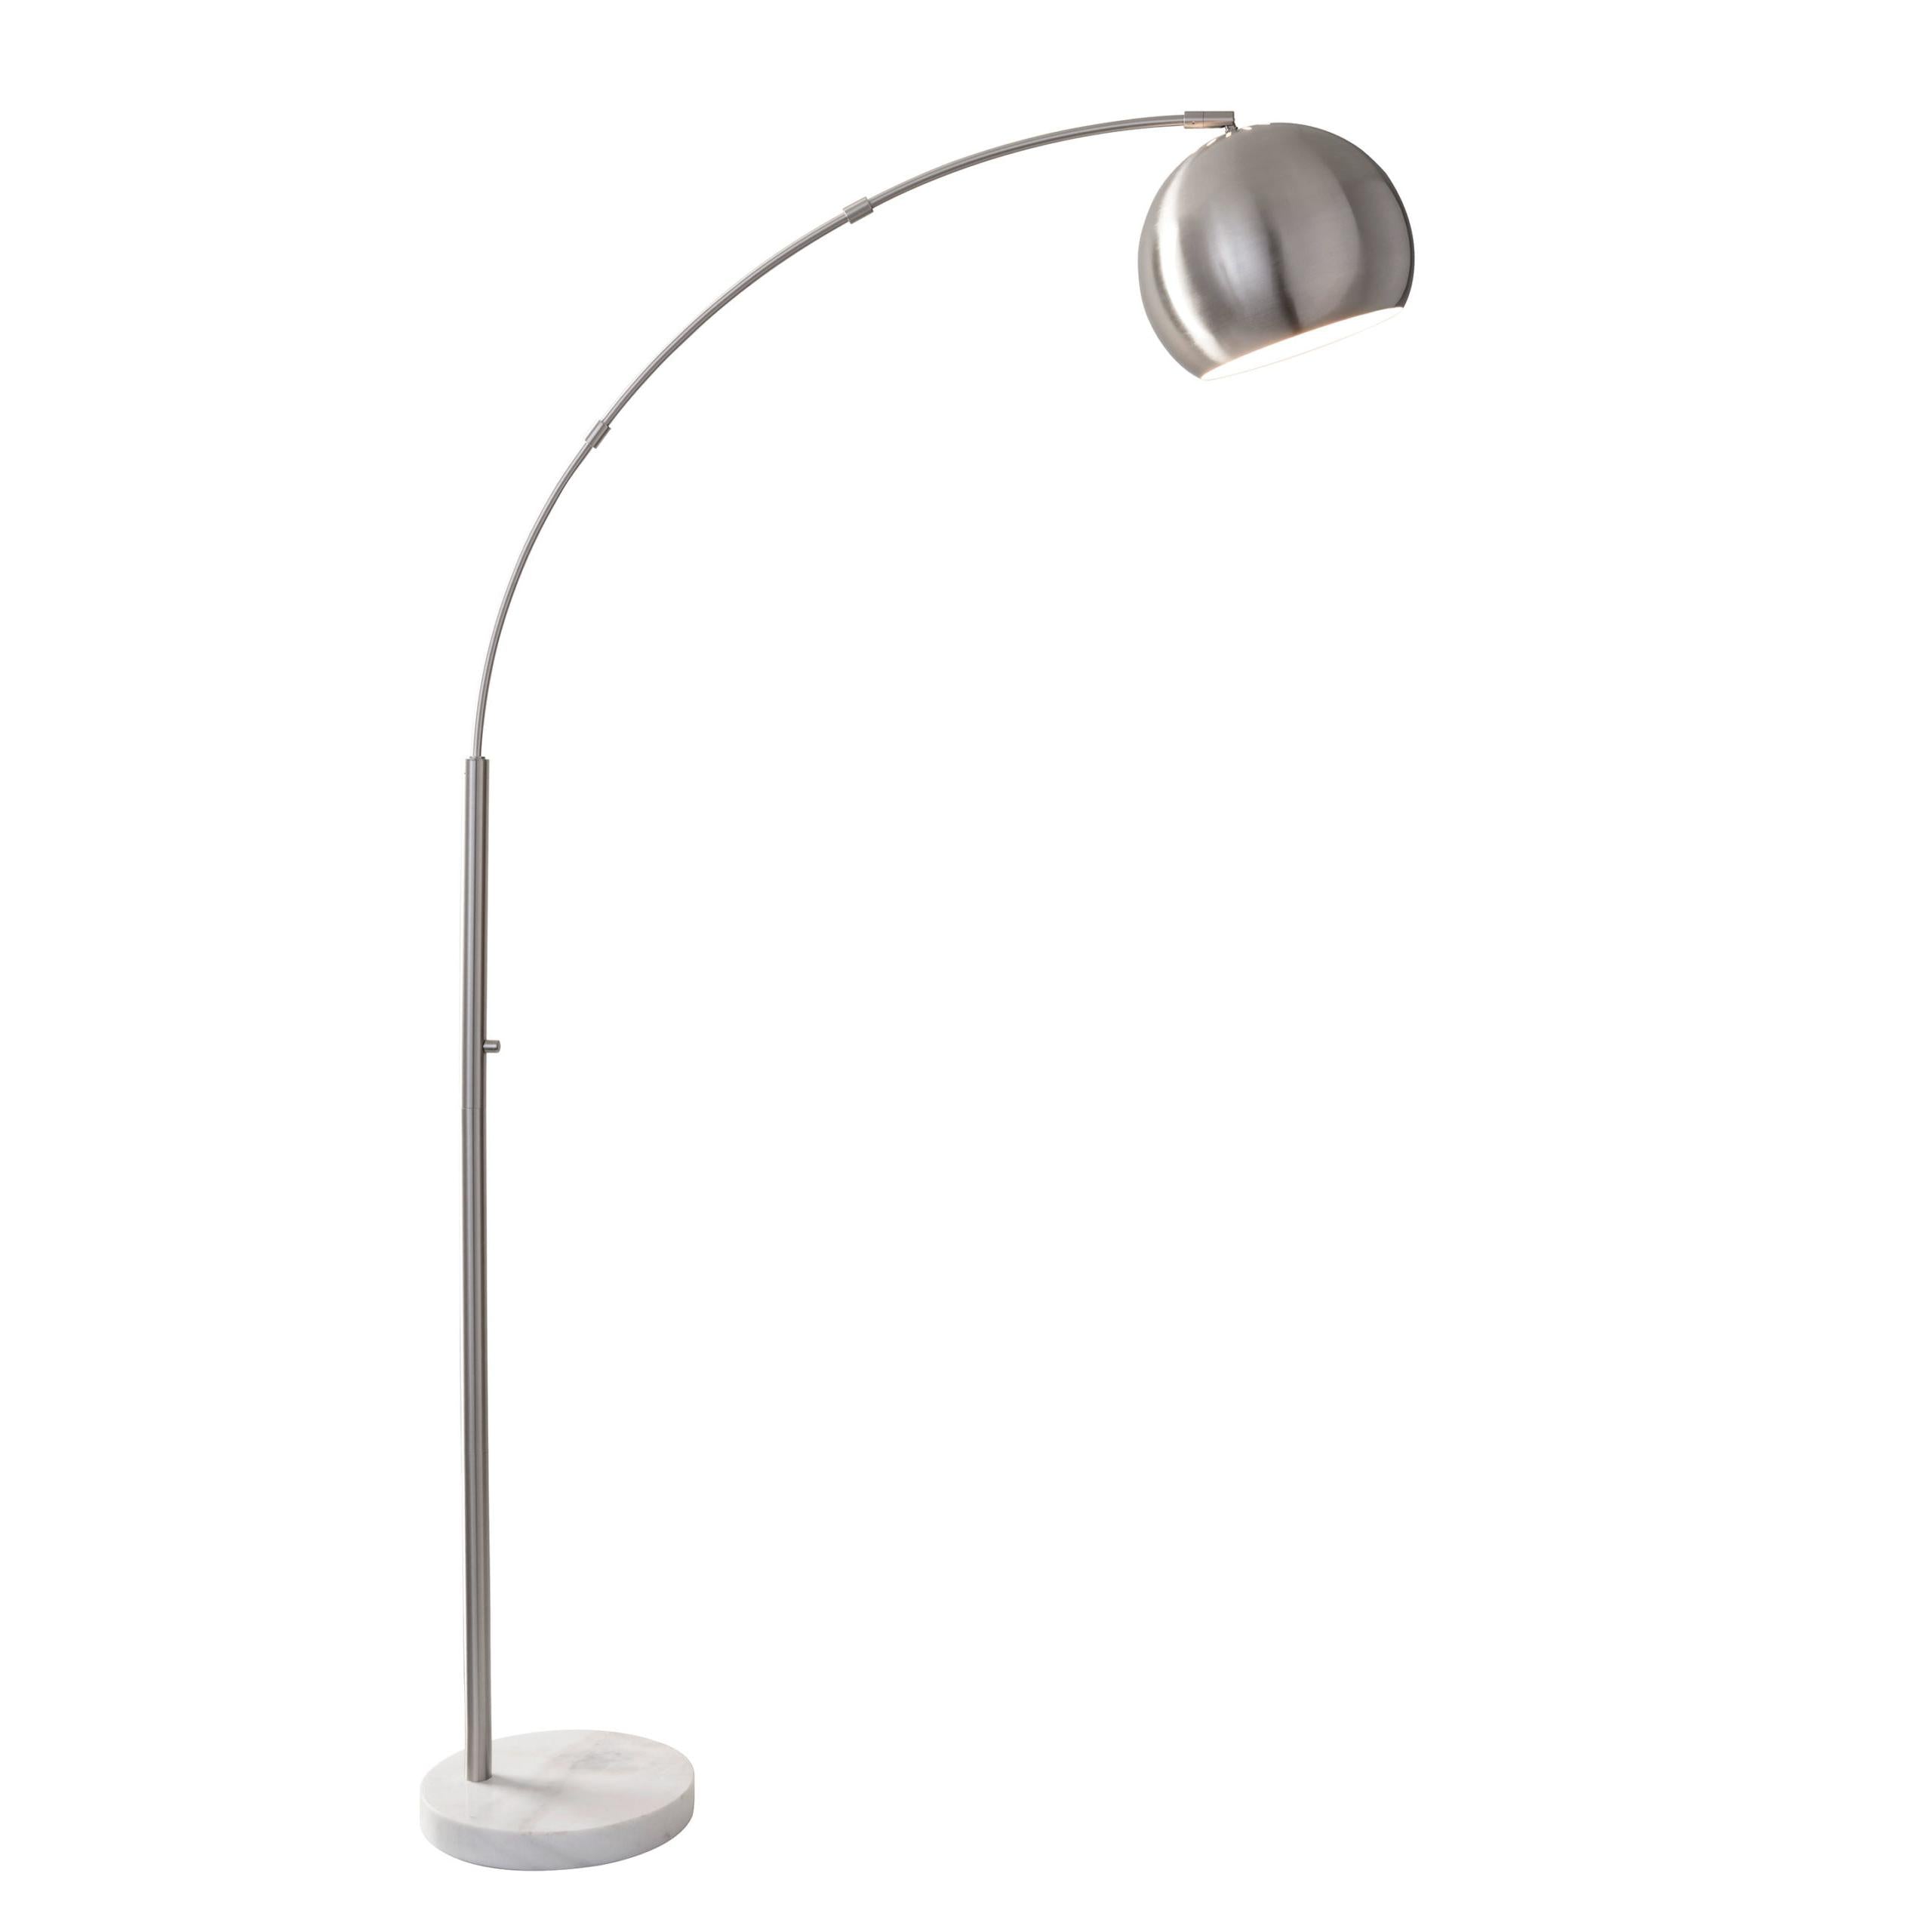 NEWTON Floor lamp Stainless steel - 5170-22 | ADESSO